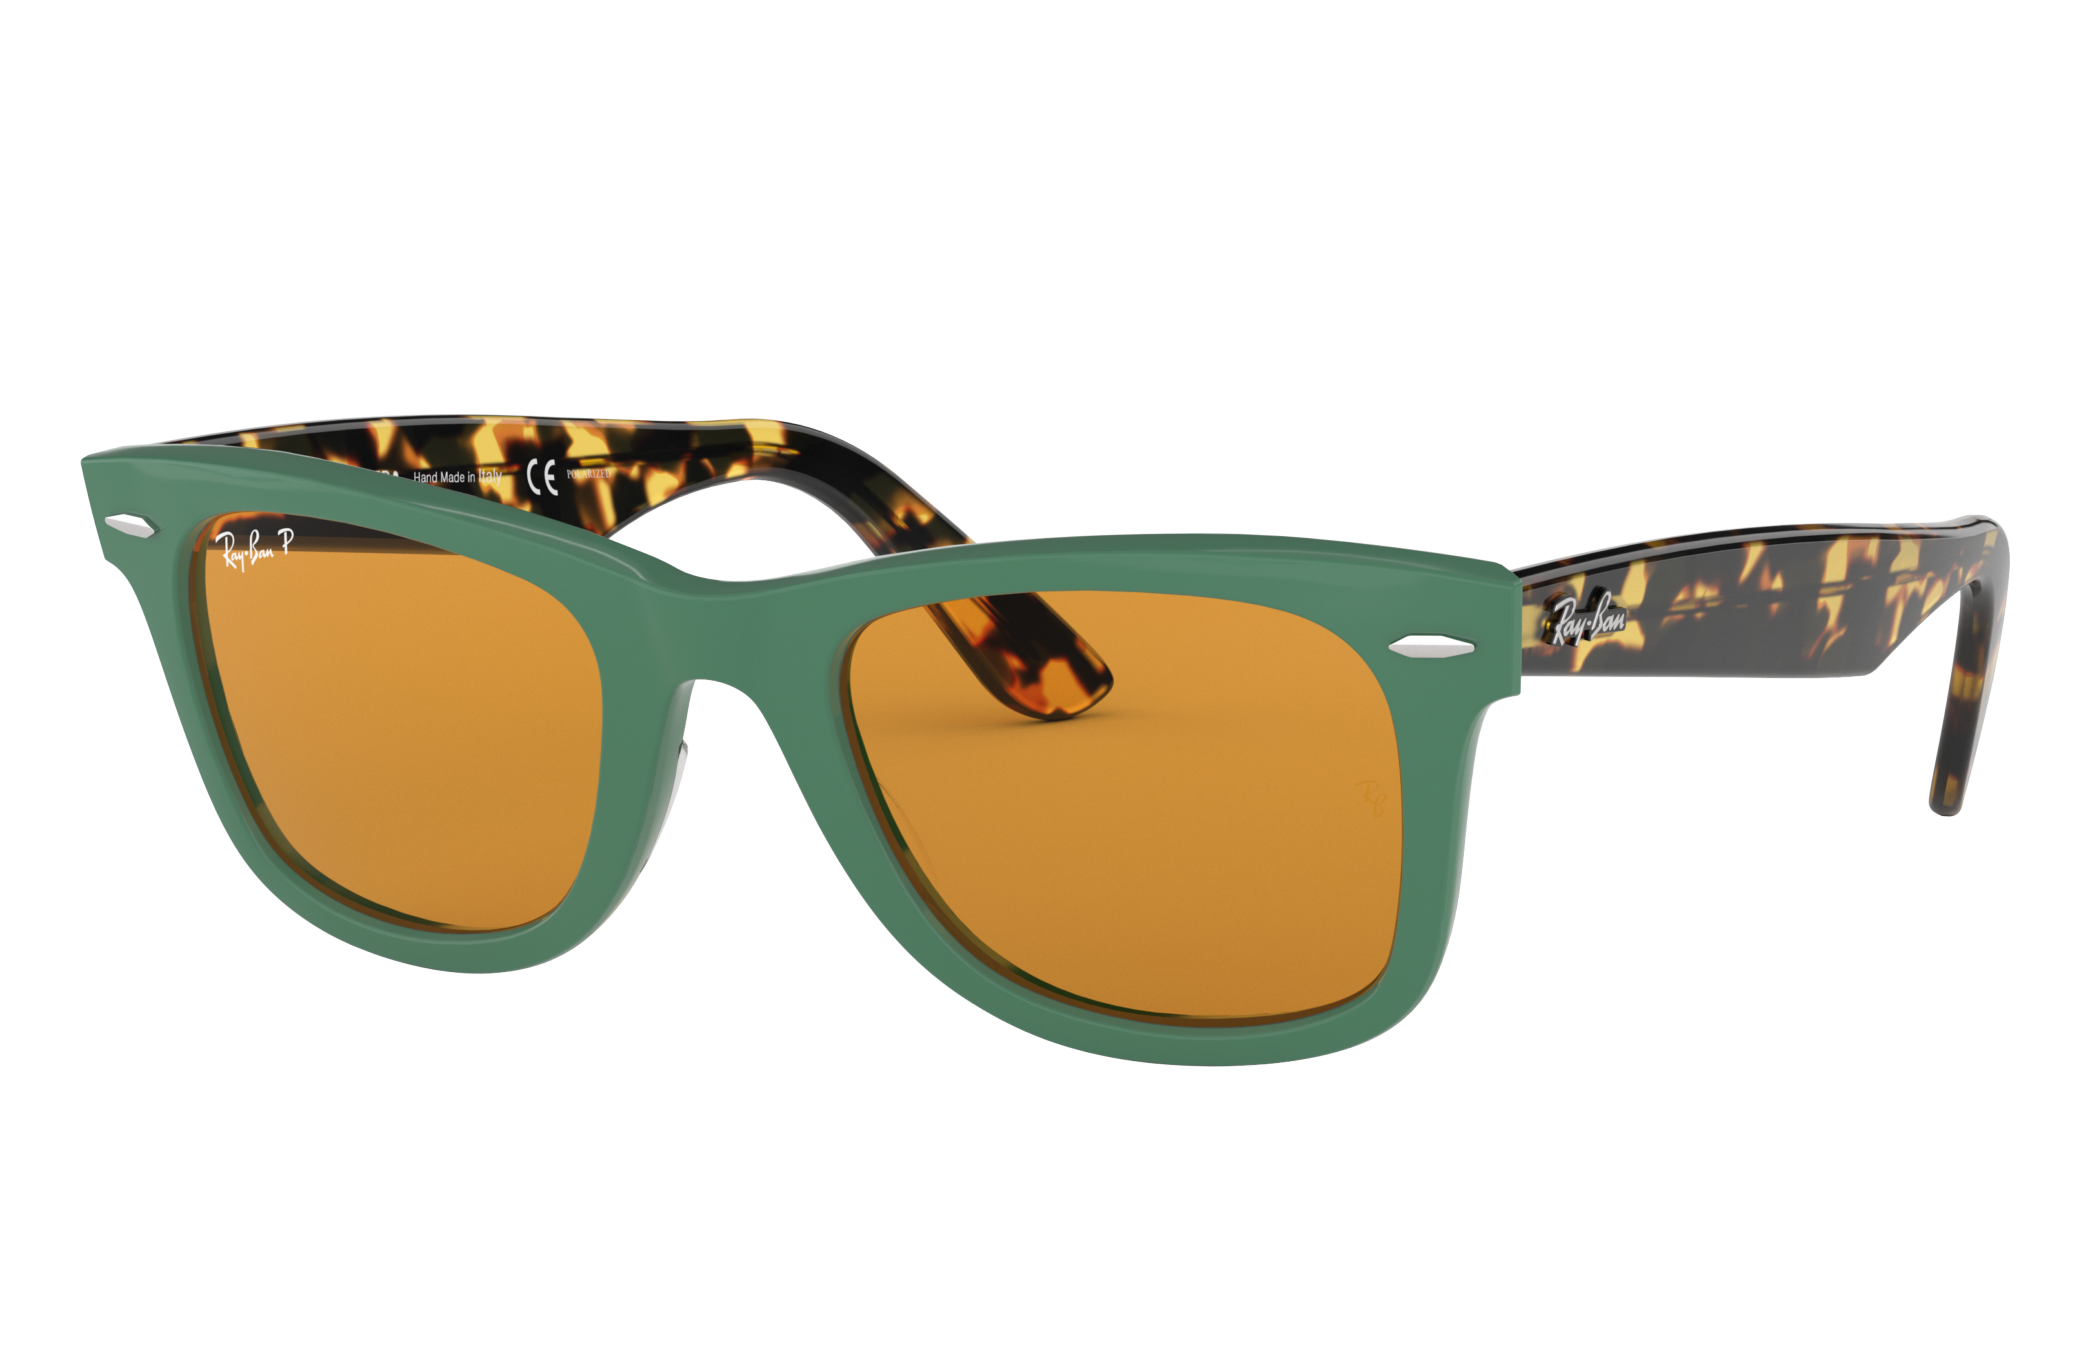 Wayfarer Pop Sunglasses in Green and Yellow | Ray-Ban®